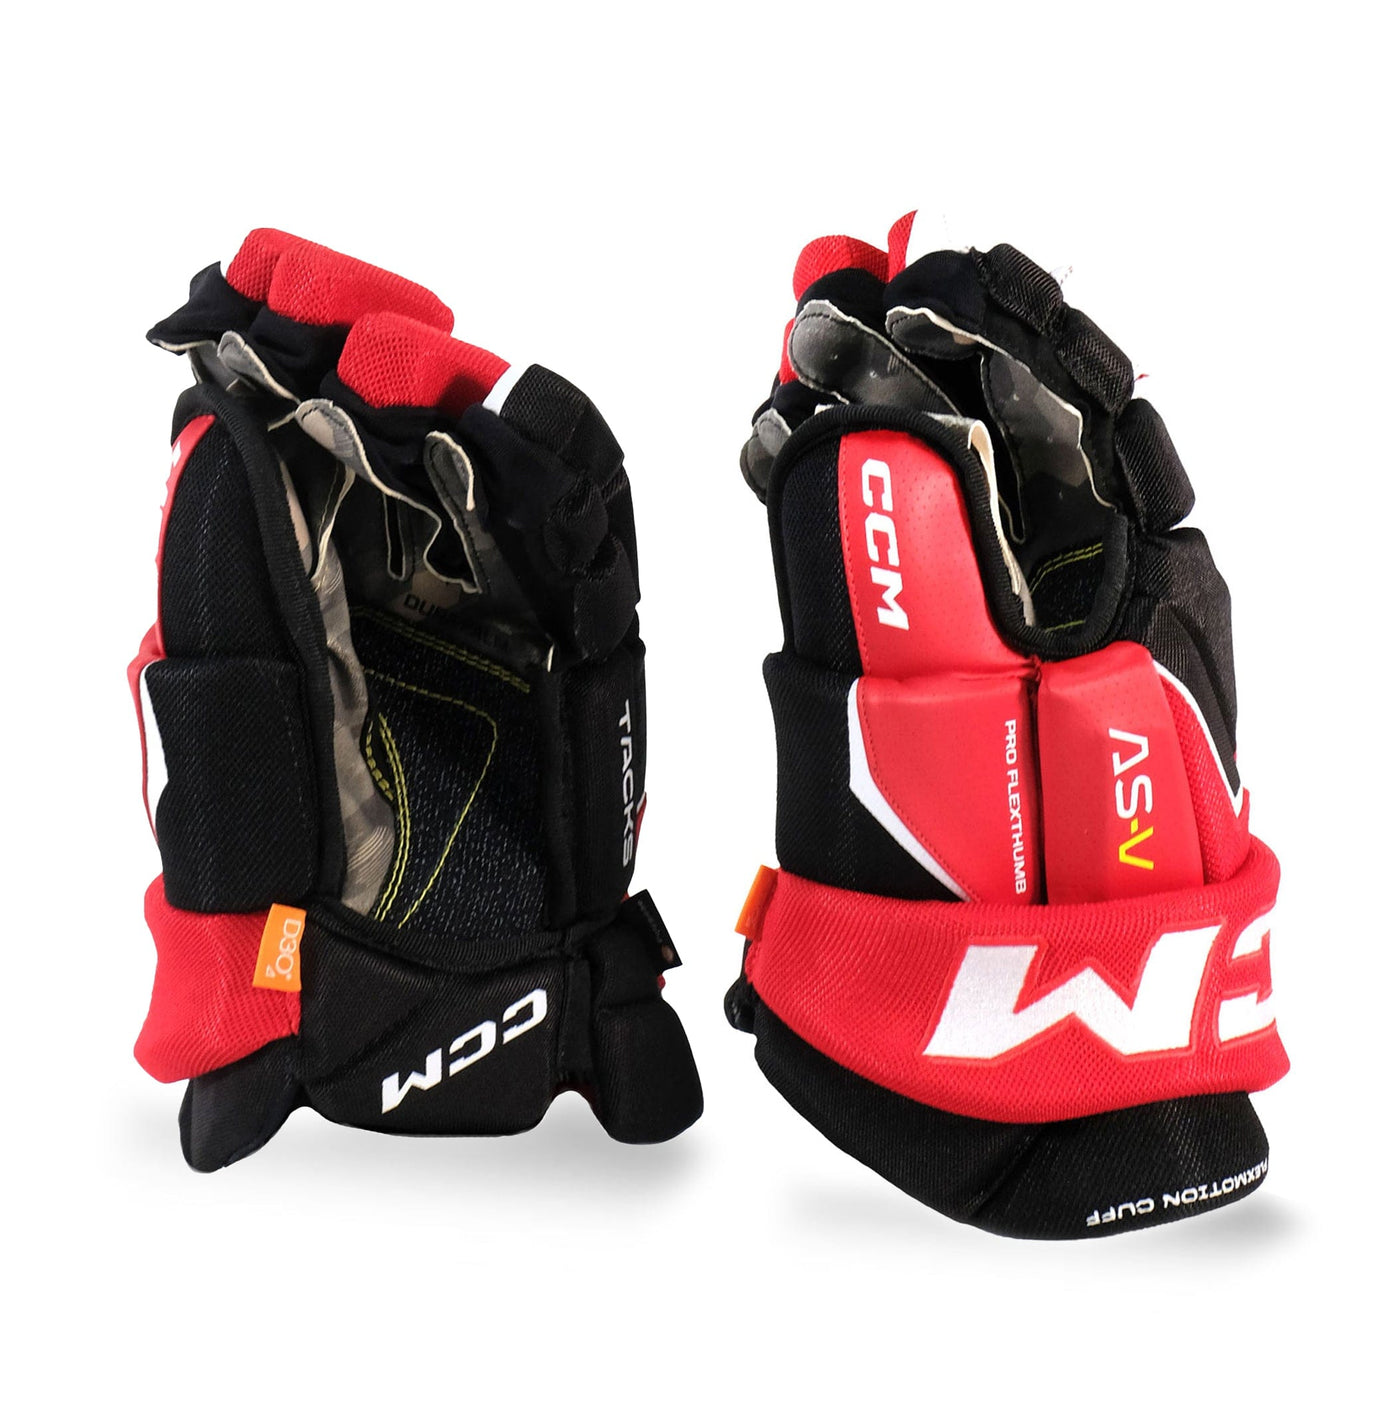 CCM Tacks AS-V Junior Hockey Gloves - The Hockey Shop Source For Sports